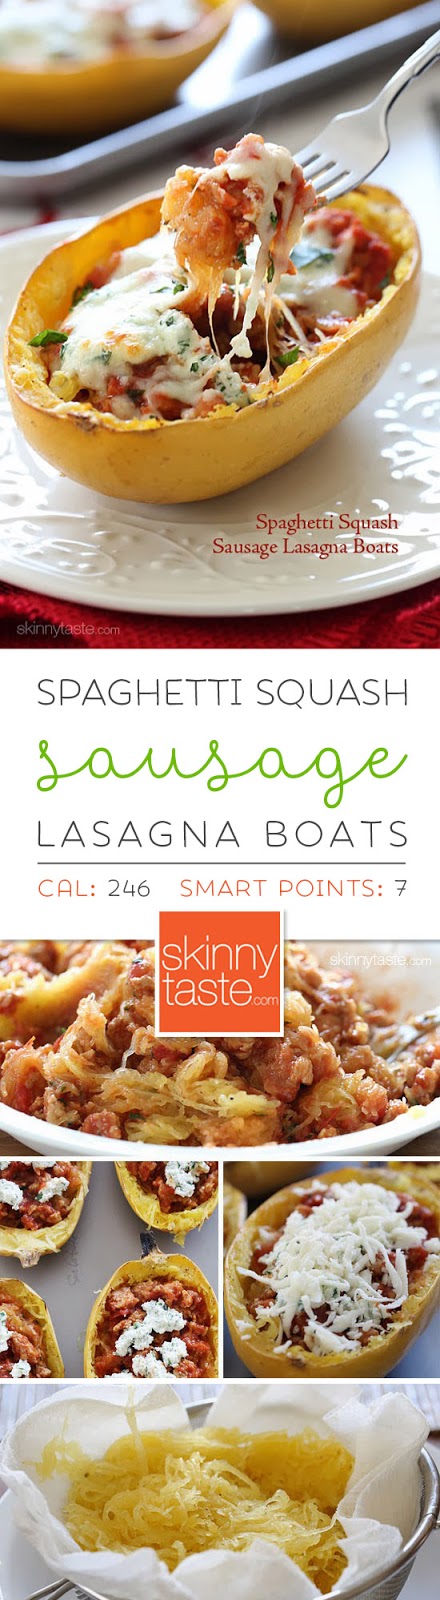 Spaghetti Squash Sausage Lasagna Boats – stuffed with chicken sausage, marinara, ricotta and mozzarella, YUM!